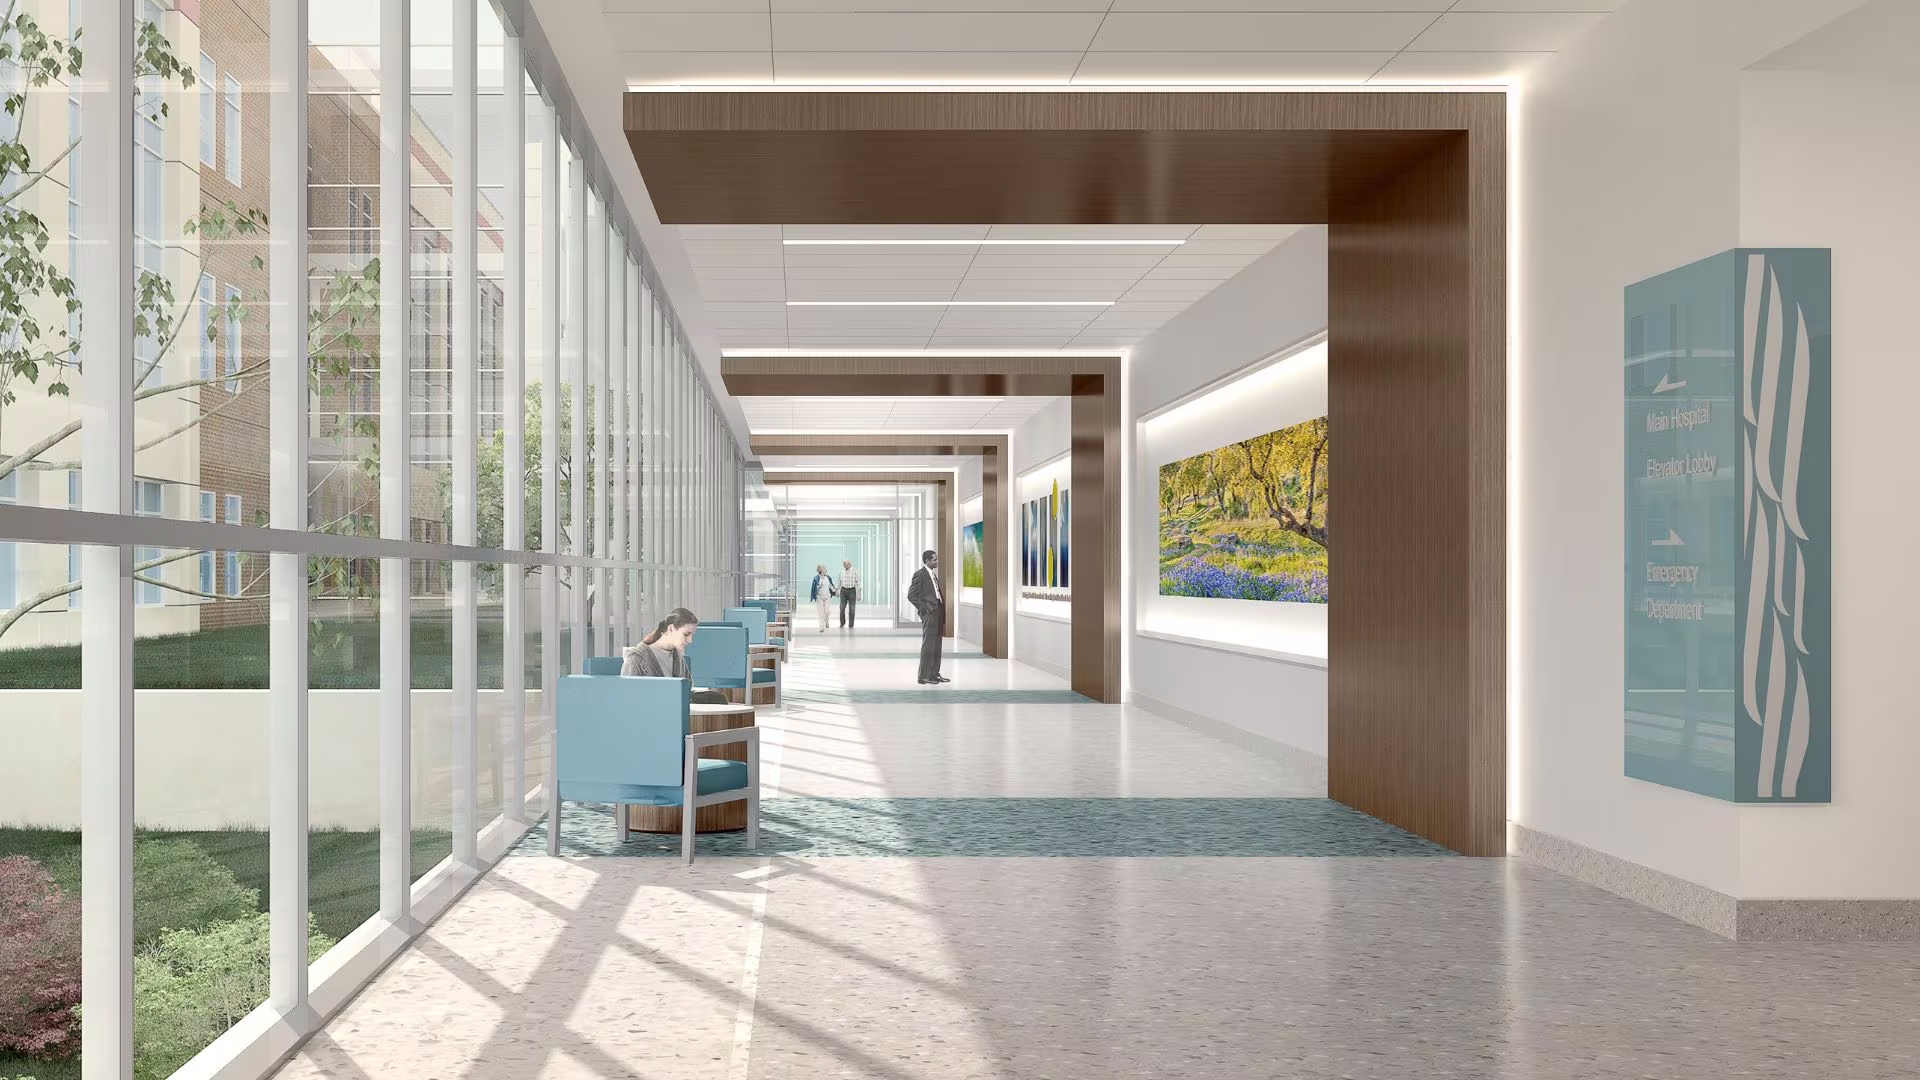 A hospital lobby with large windows.